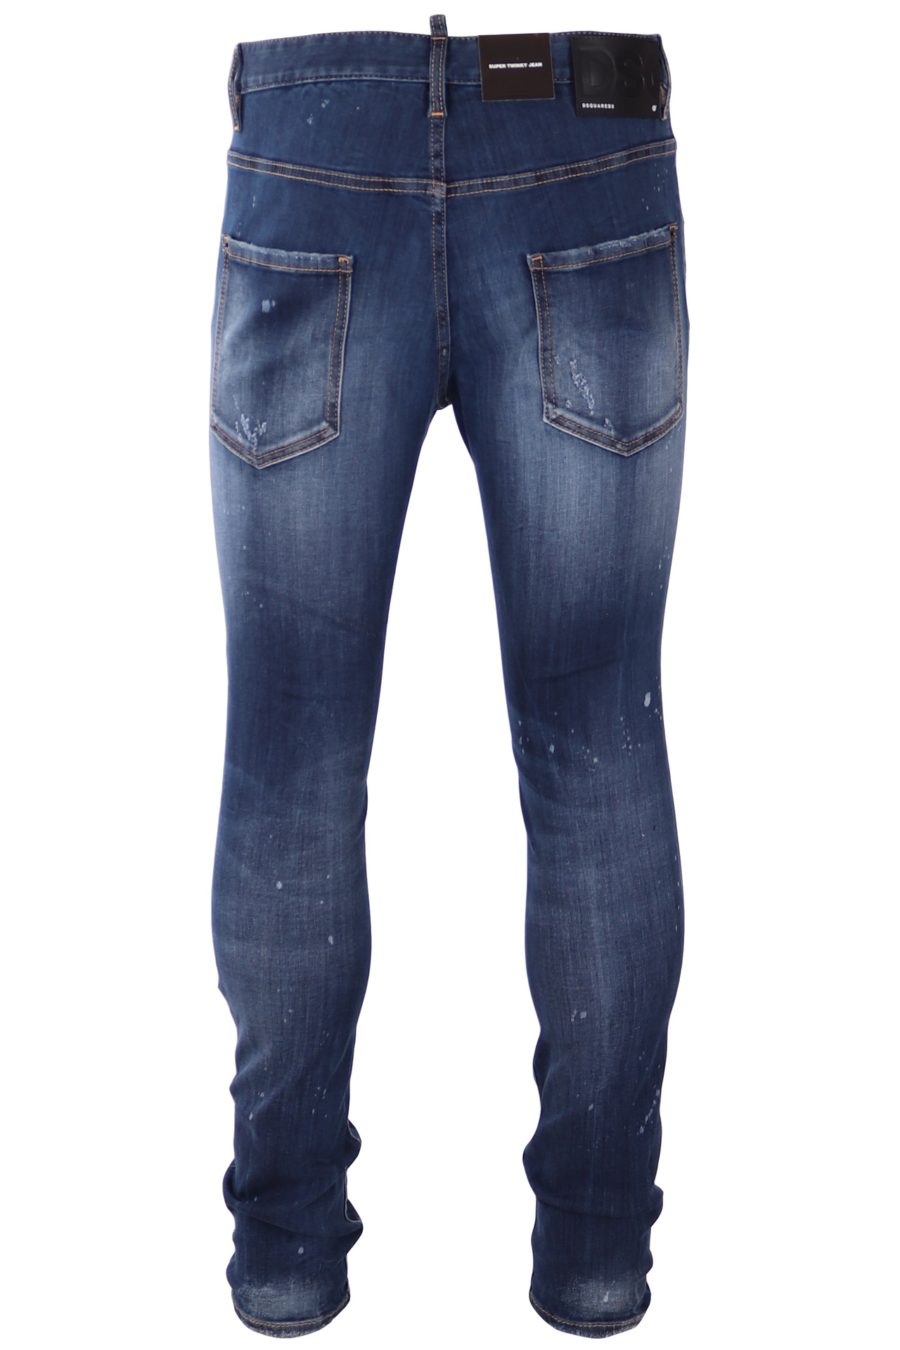 Jeans Dsquared2 Super Twinky Jean patch noir - 7c4a6c9d96f5ae89f8082c01b1c6a1690ee49148